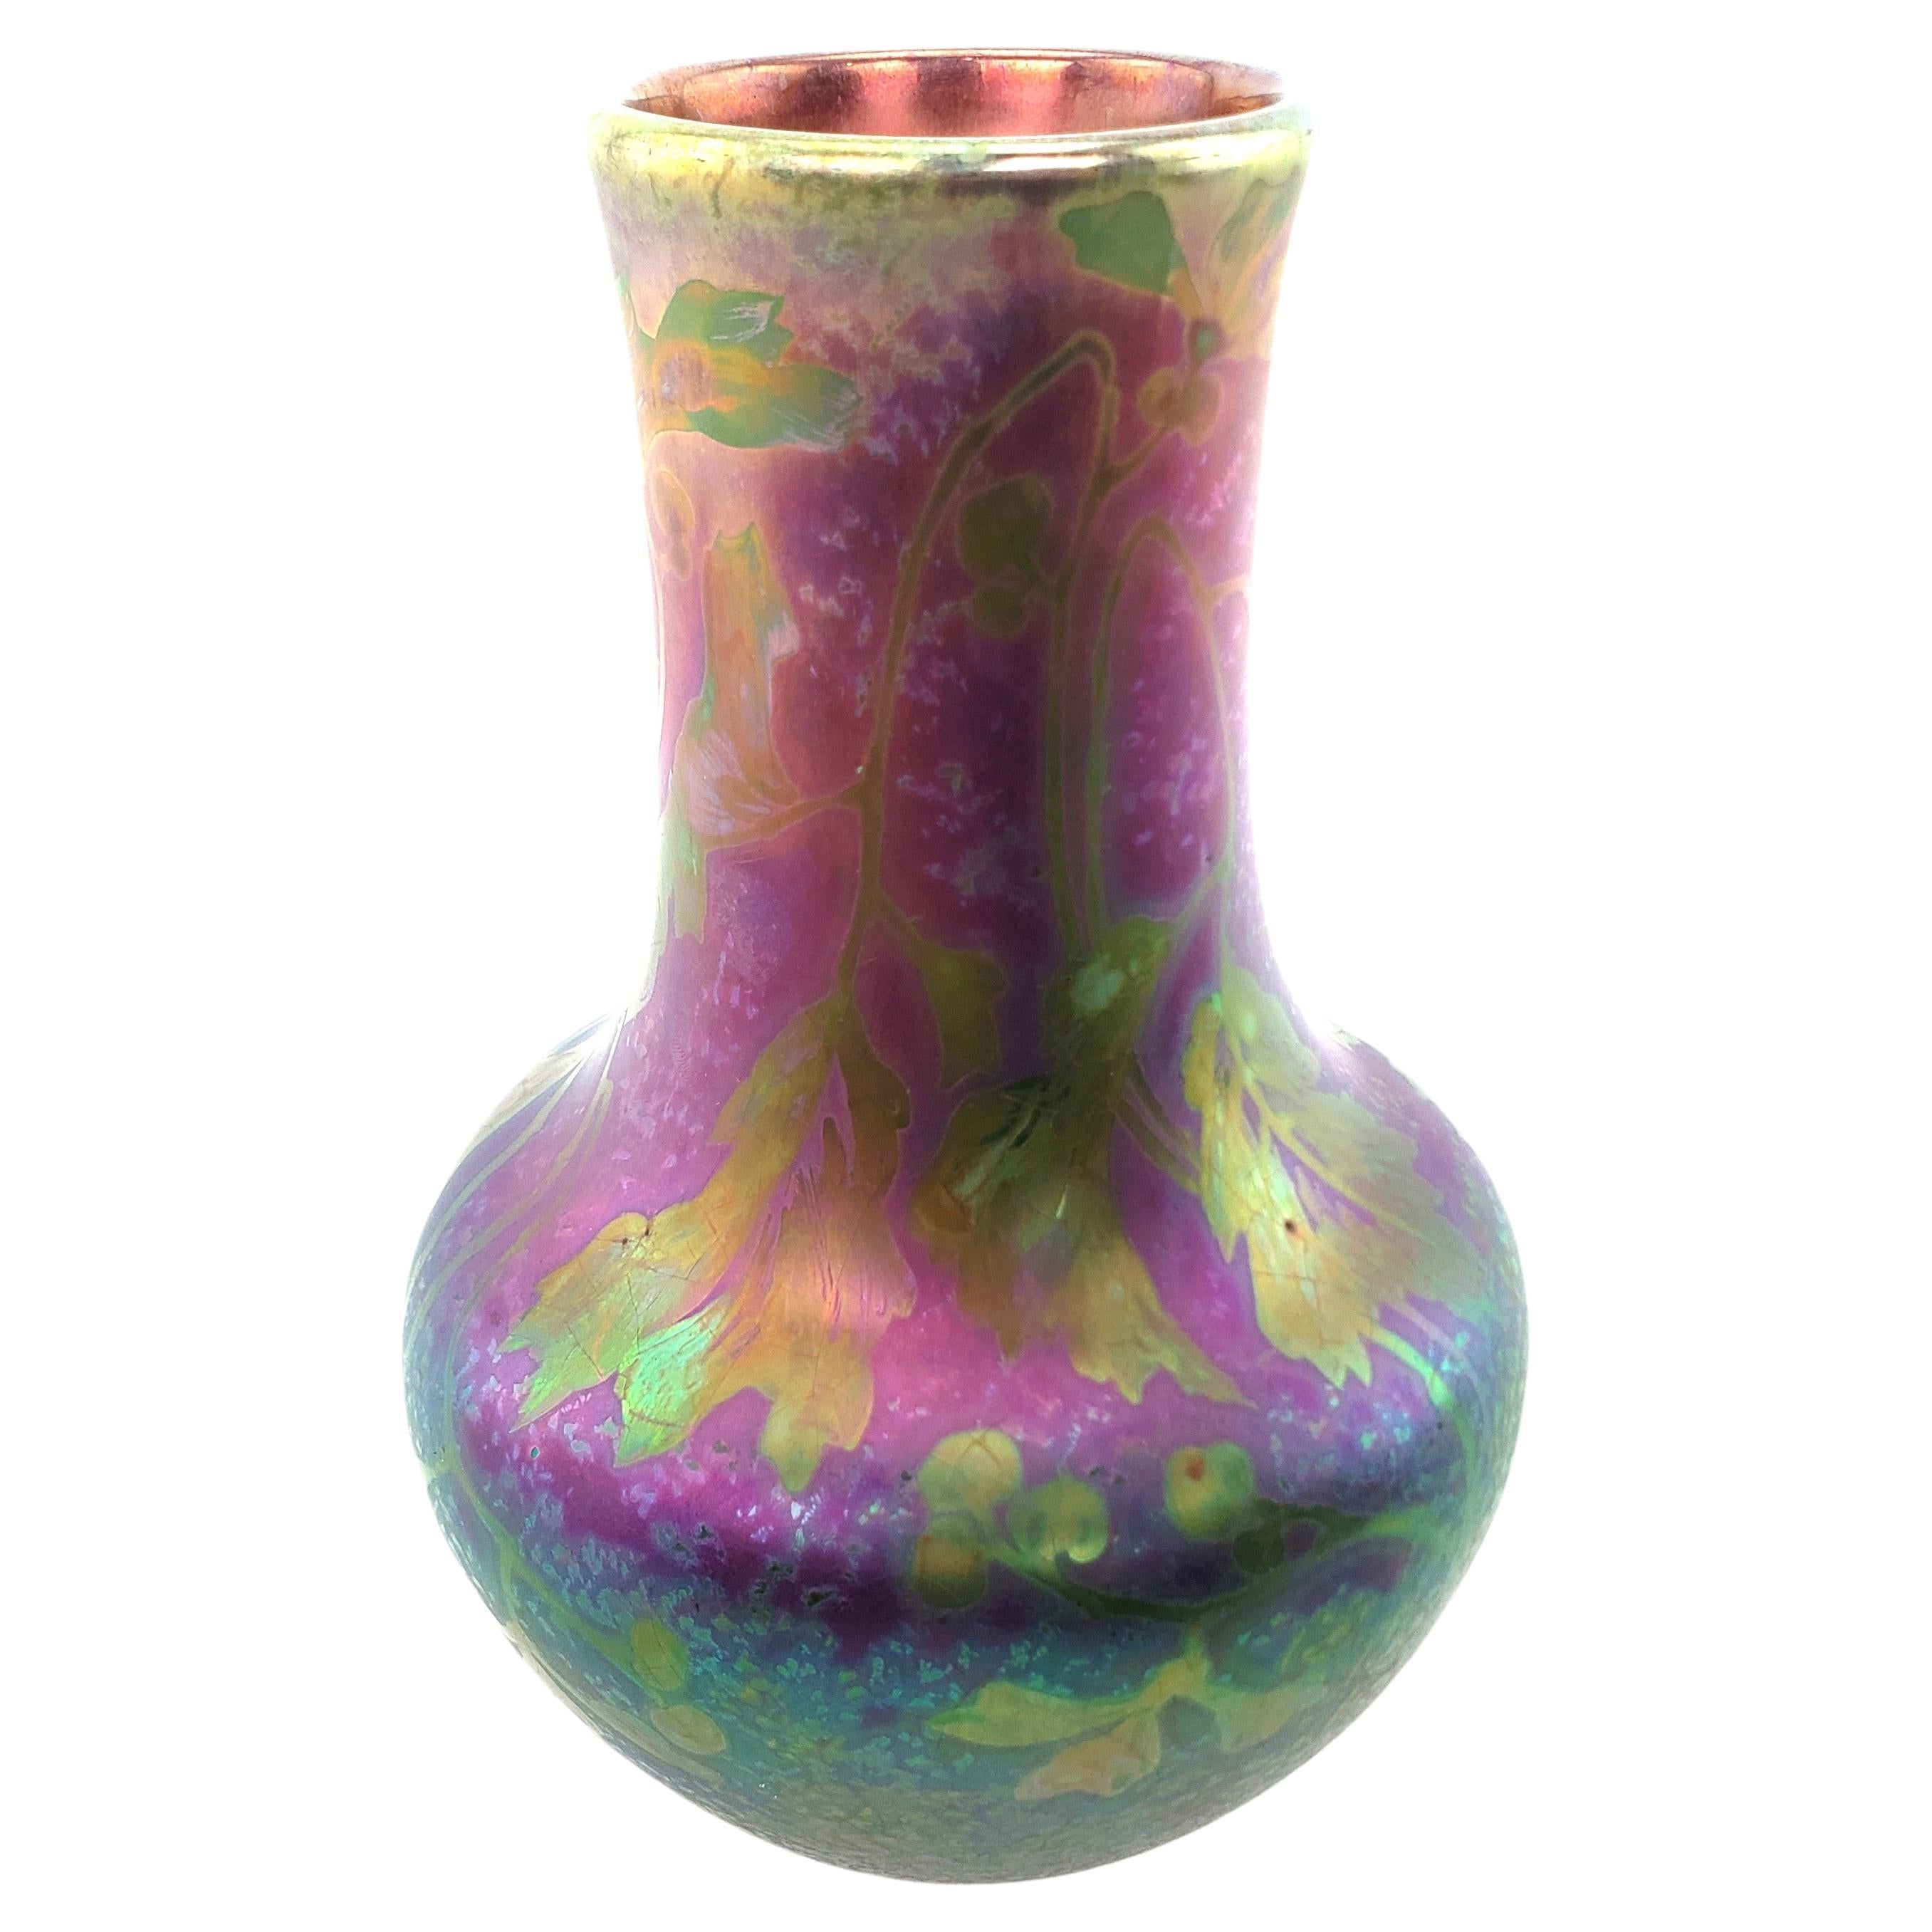 Grand vase d'art irisé Weller Sicard avec fleurs stylisées